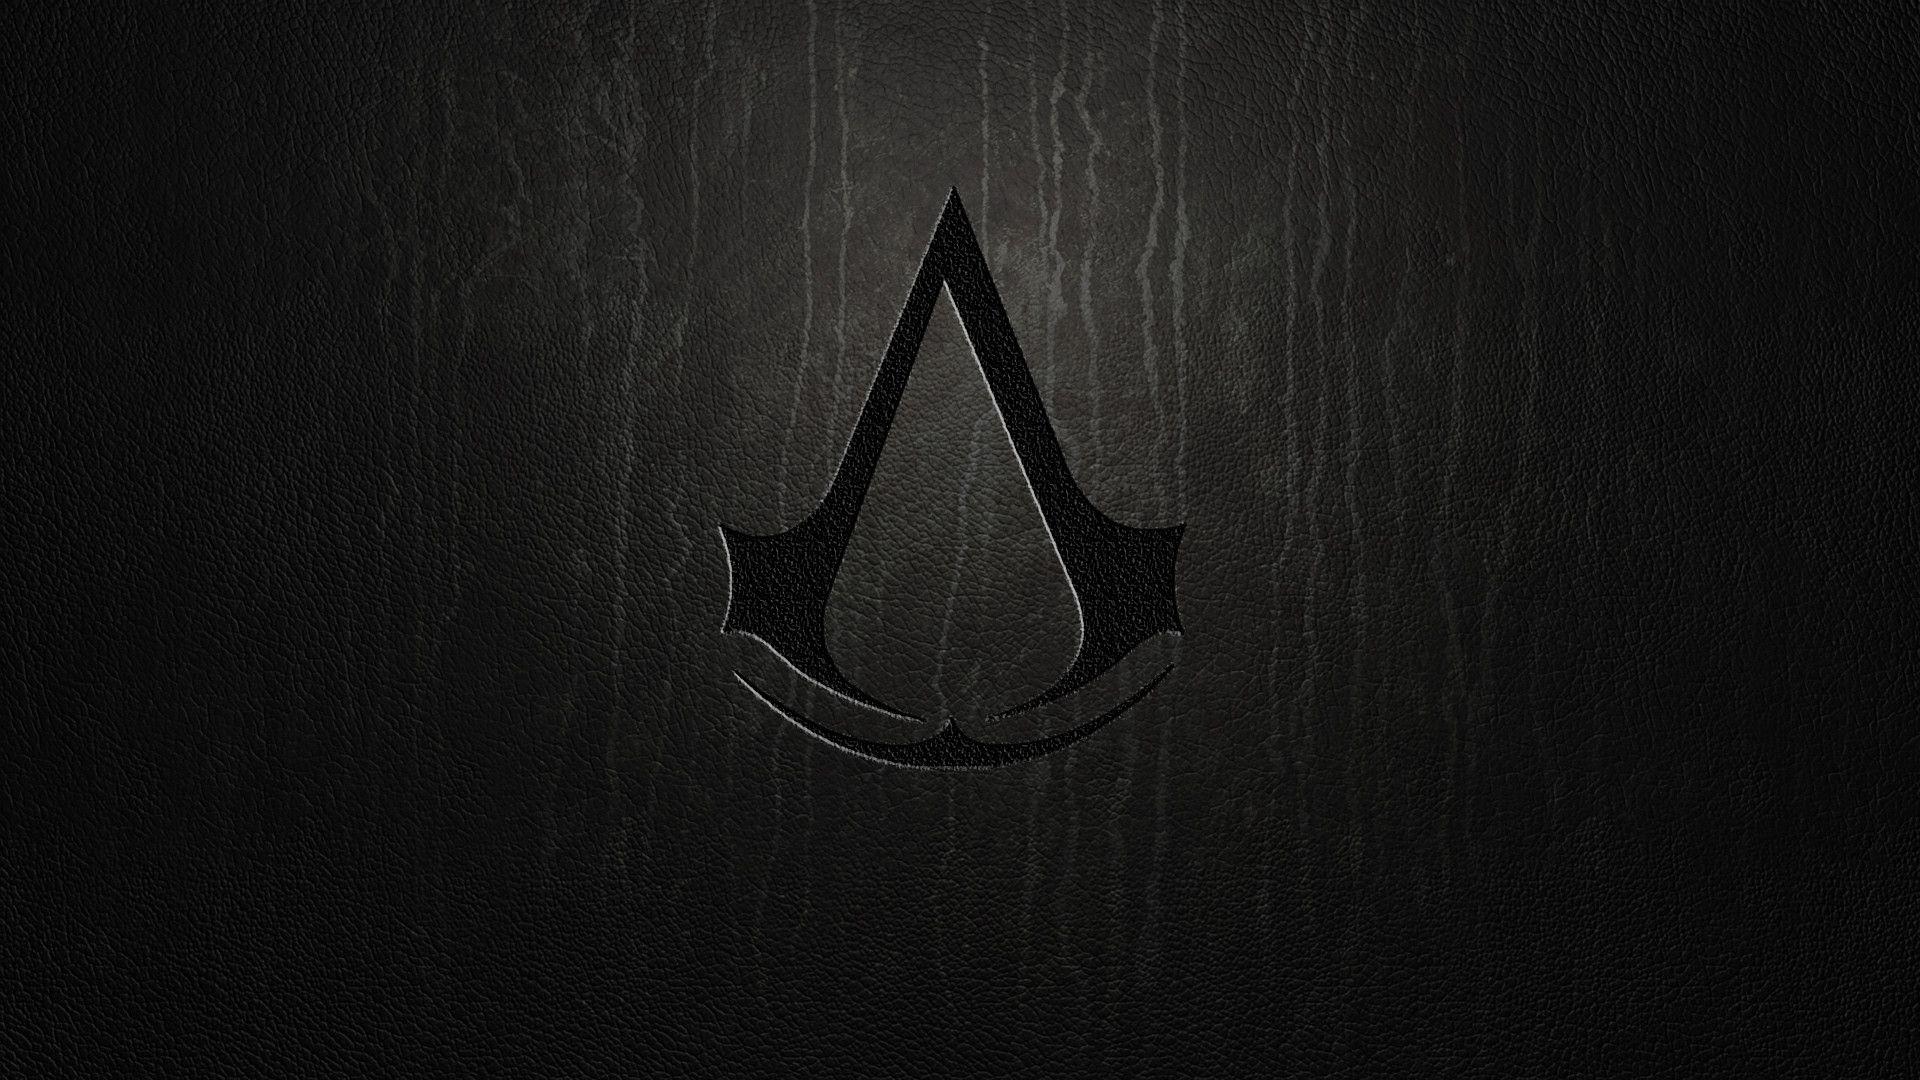 Assassins Creed Wallpaper 1920x1080. (32++ Wallpaper)